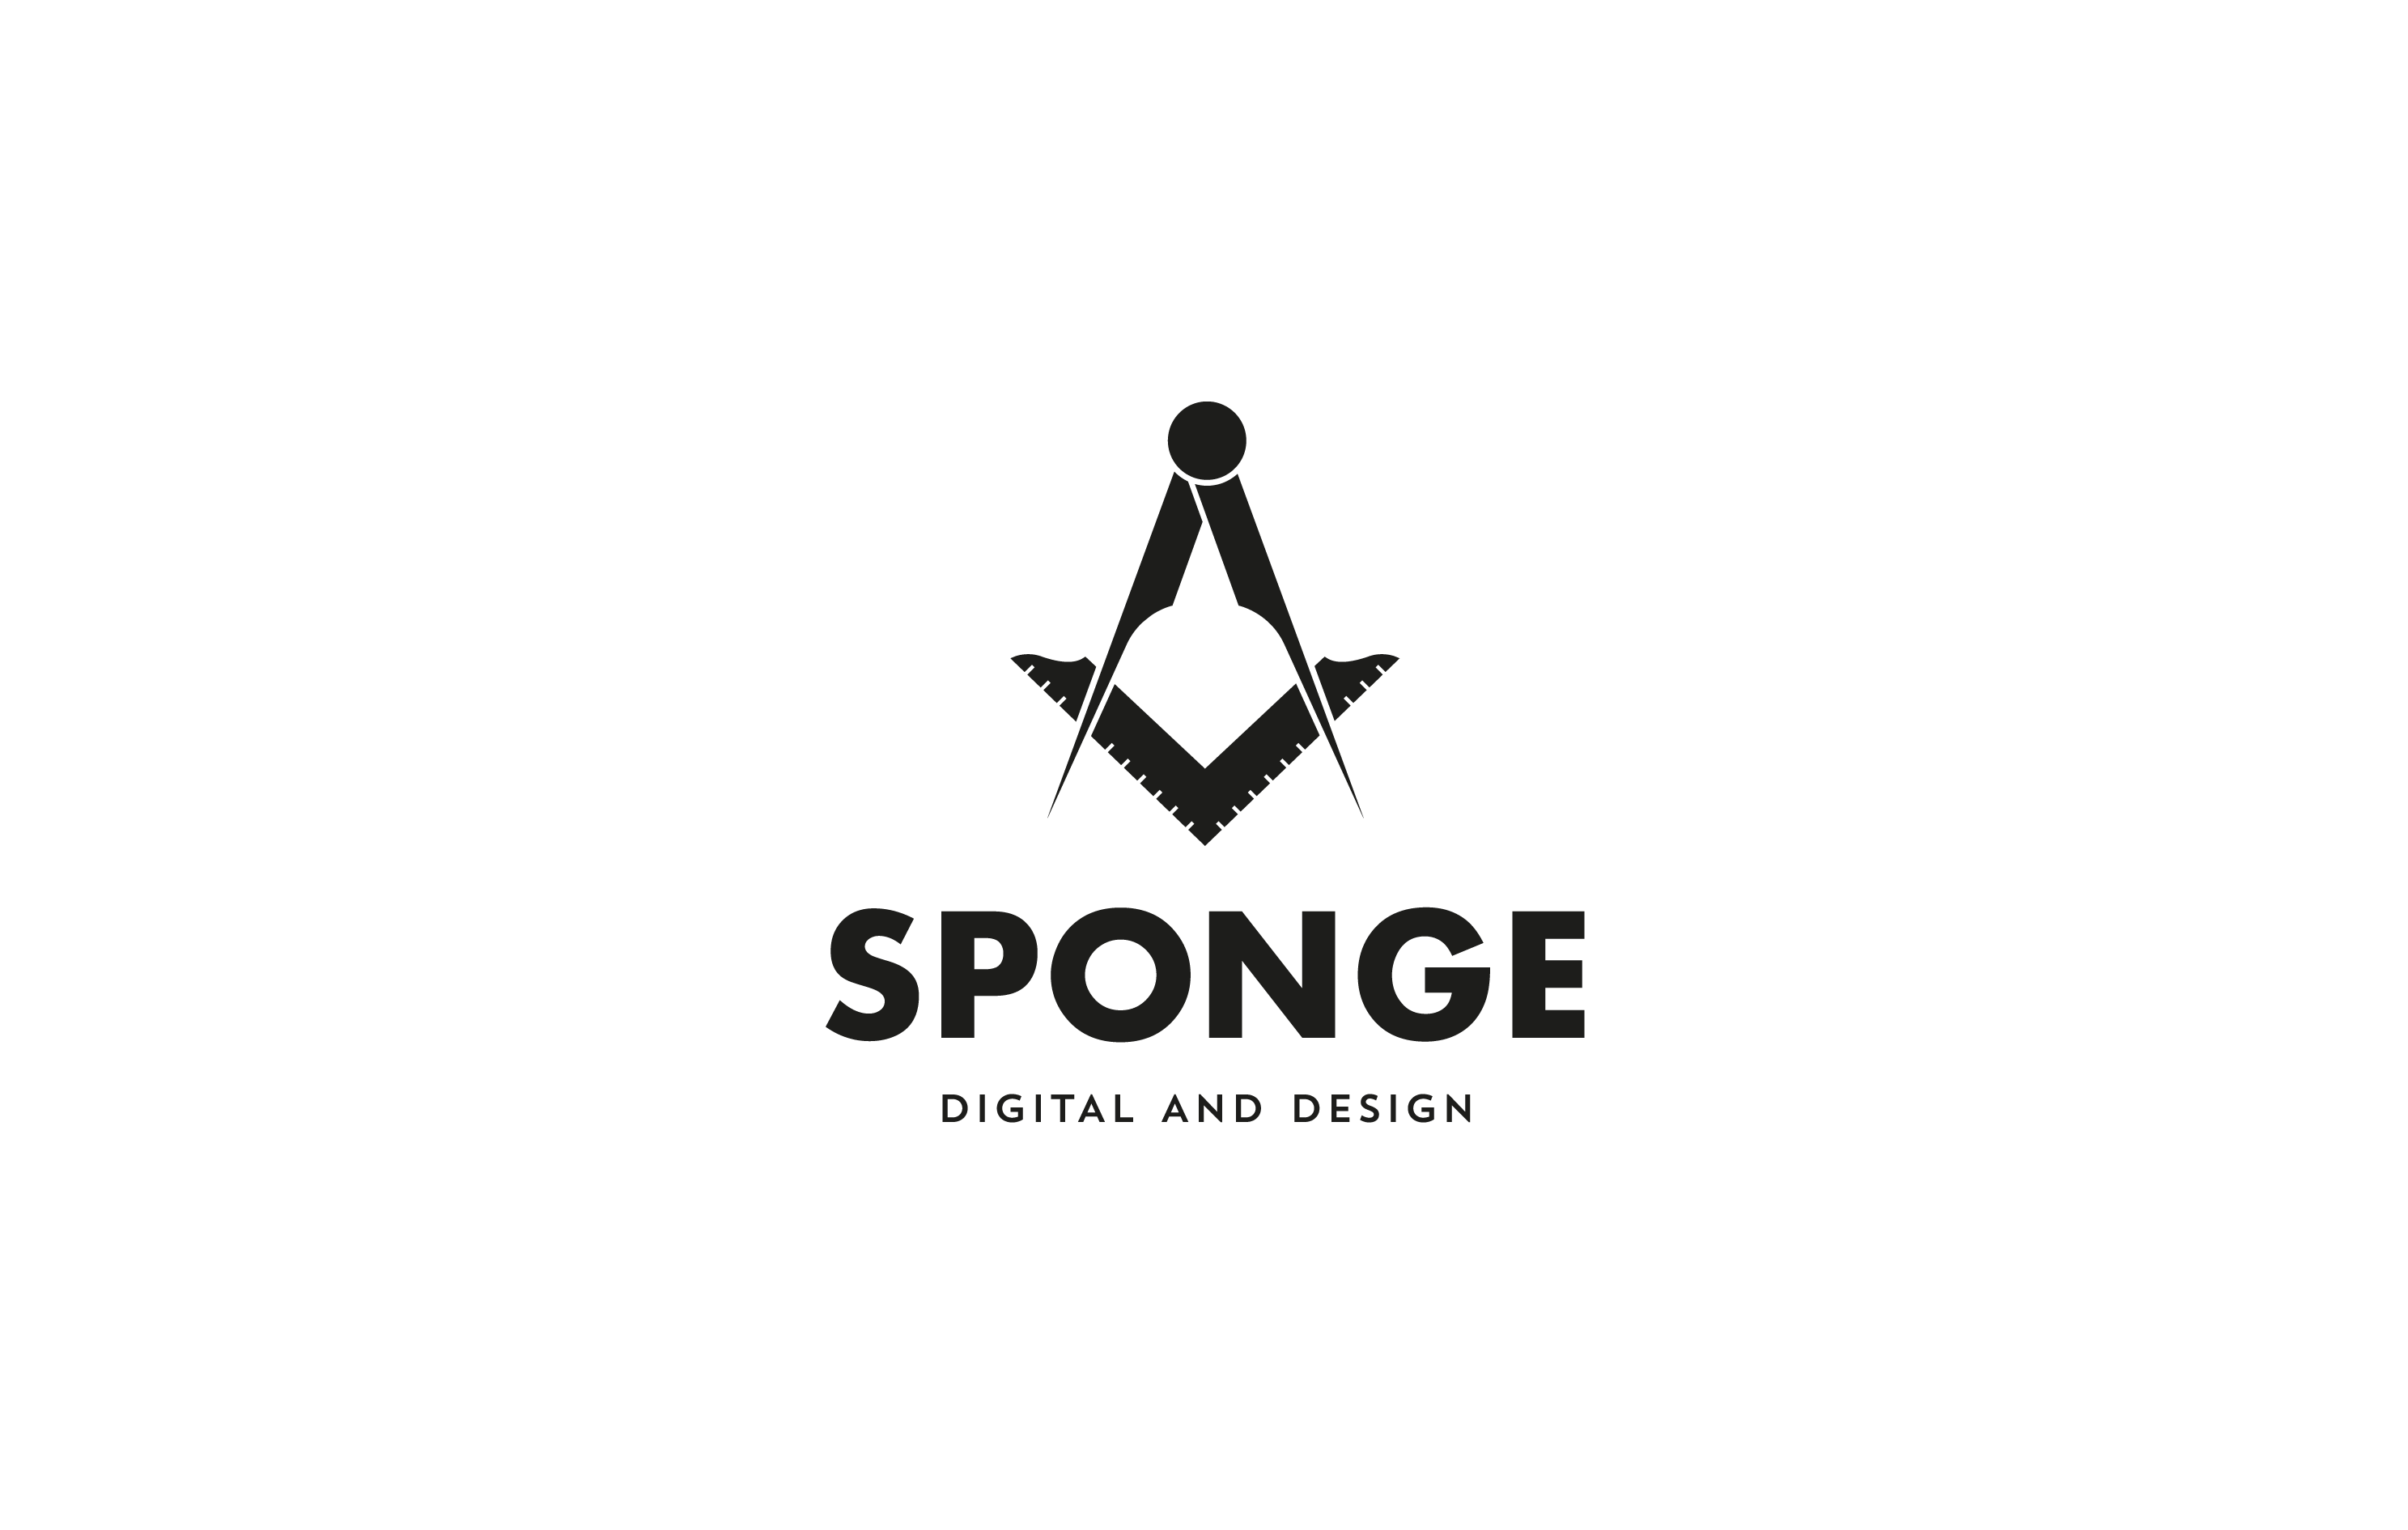 Sponge Digital & Design profile on Qualified.One